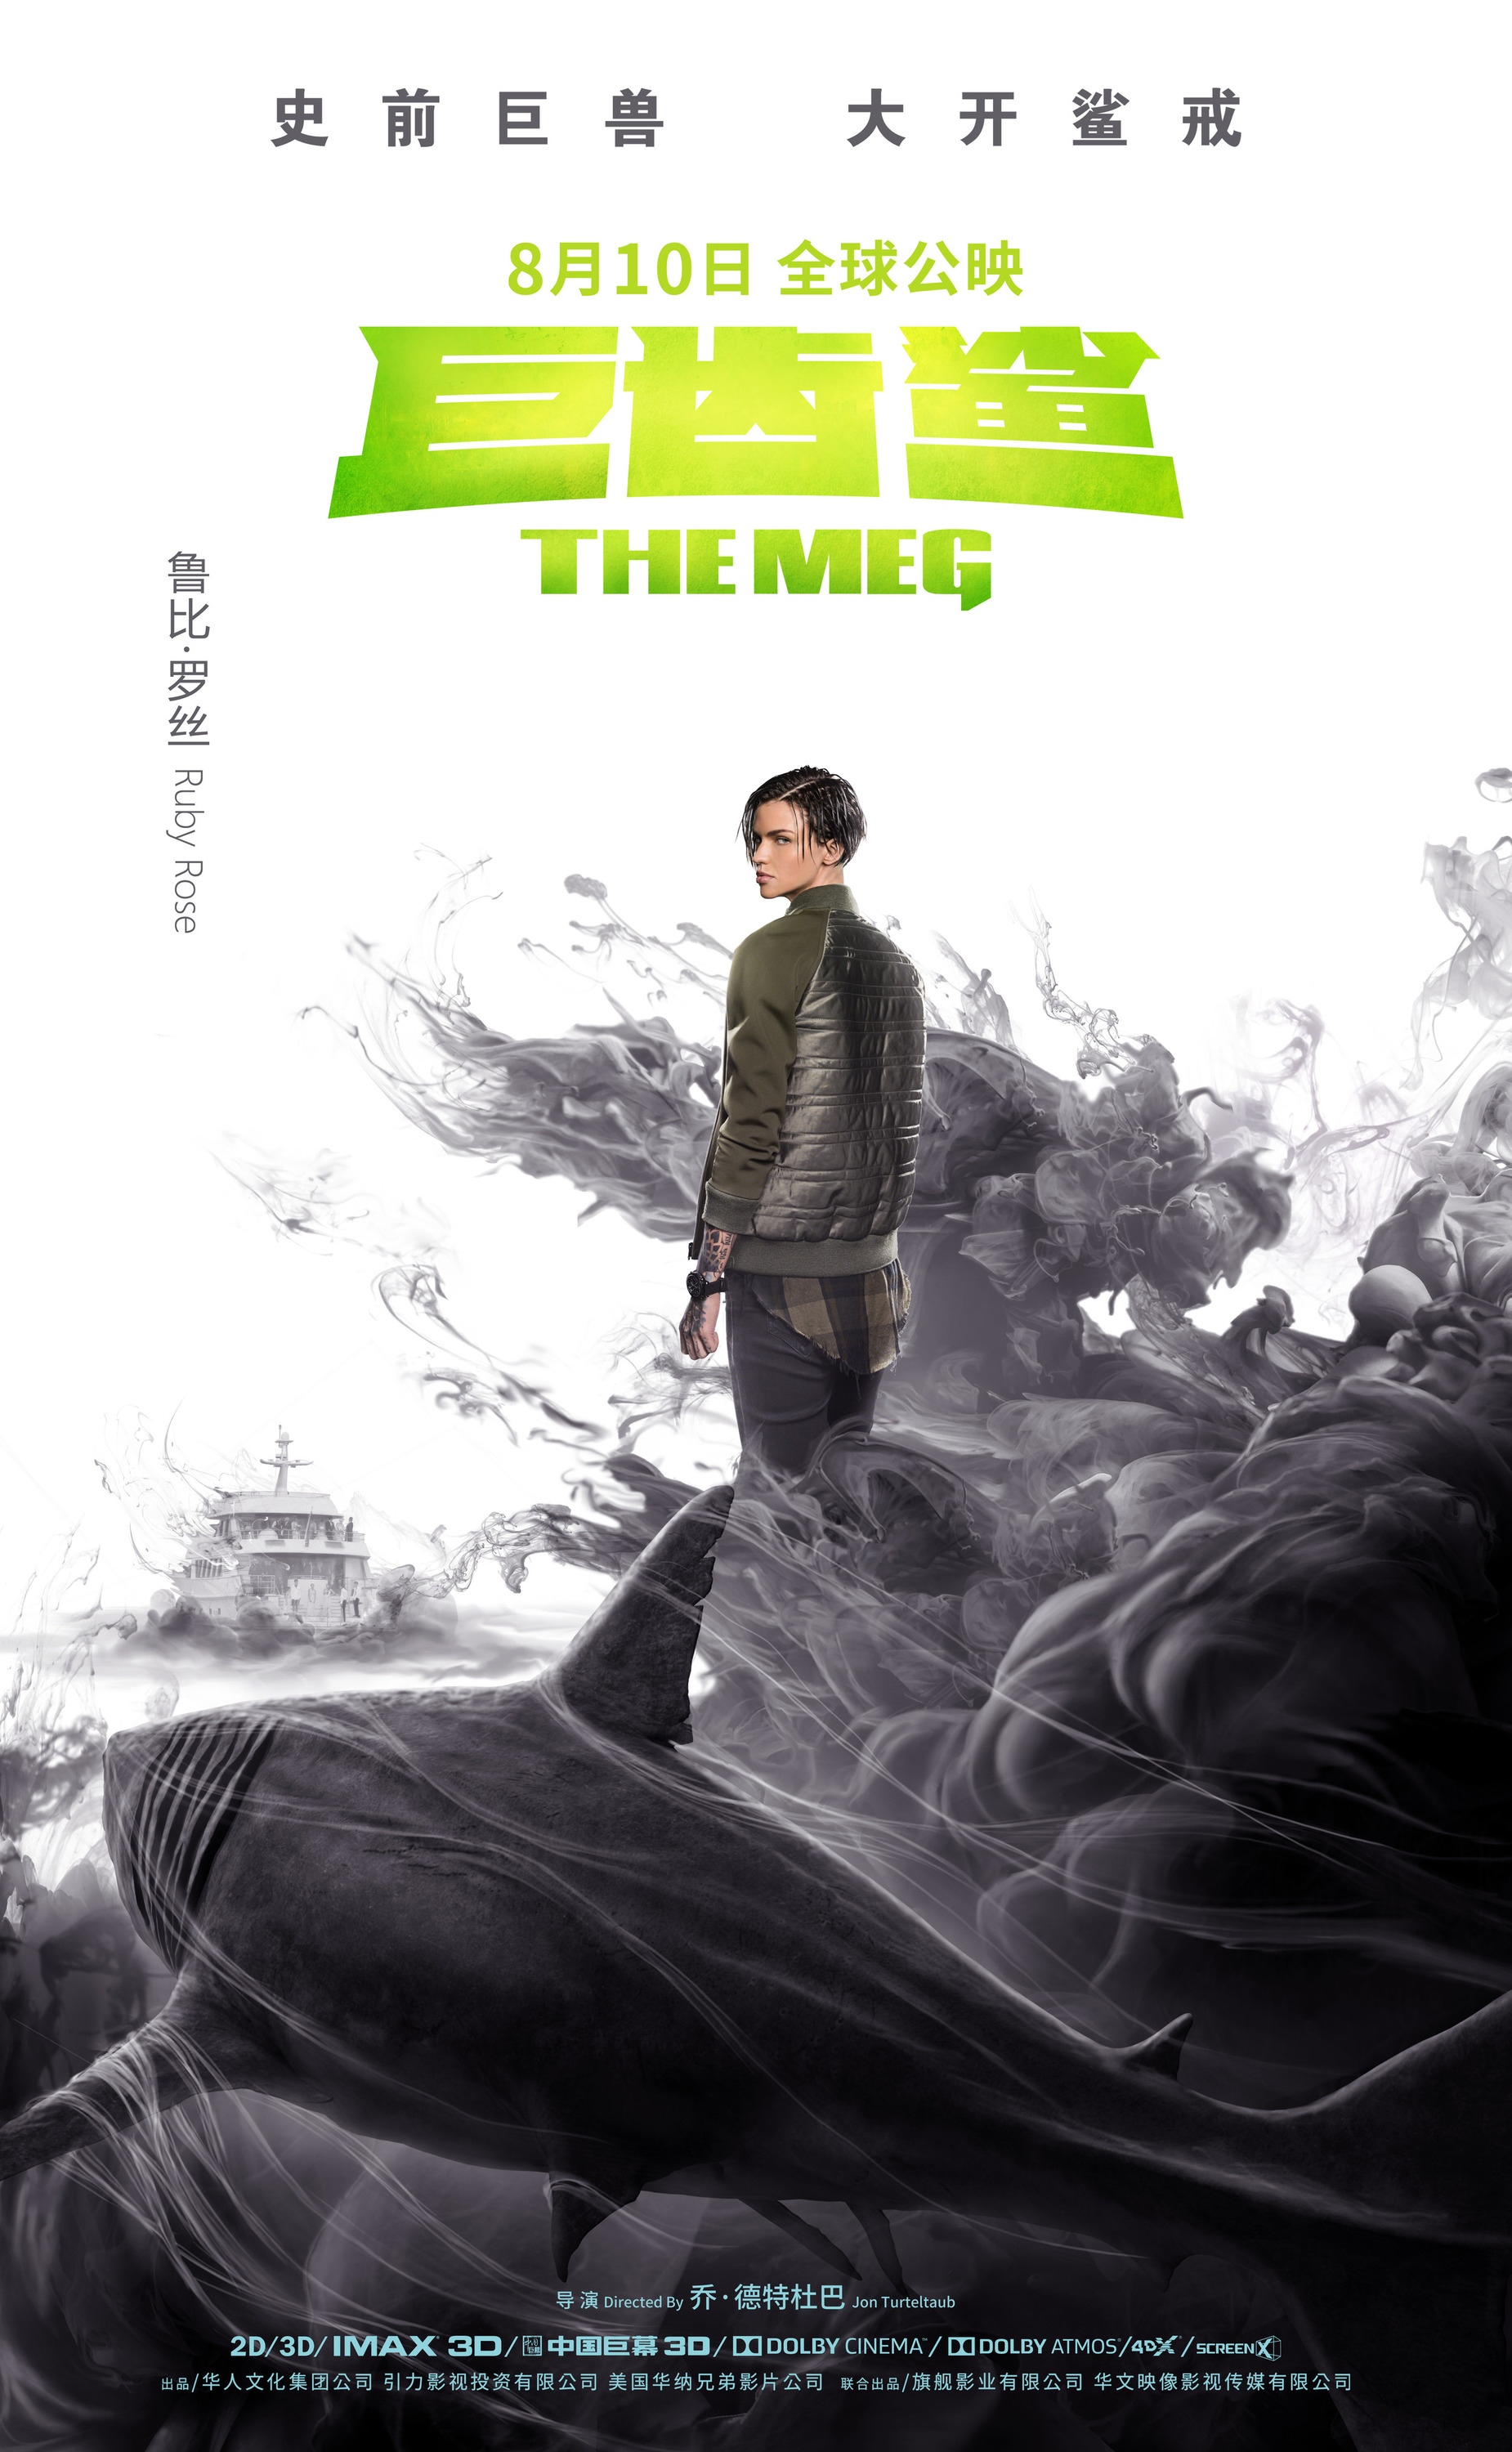 Mega Sized Movie Poster Image for The Meg (#25 of 26)